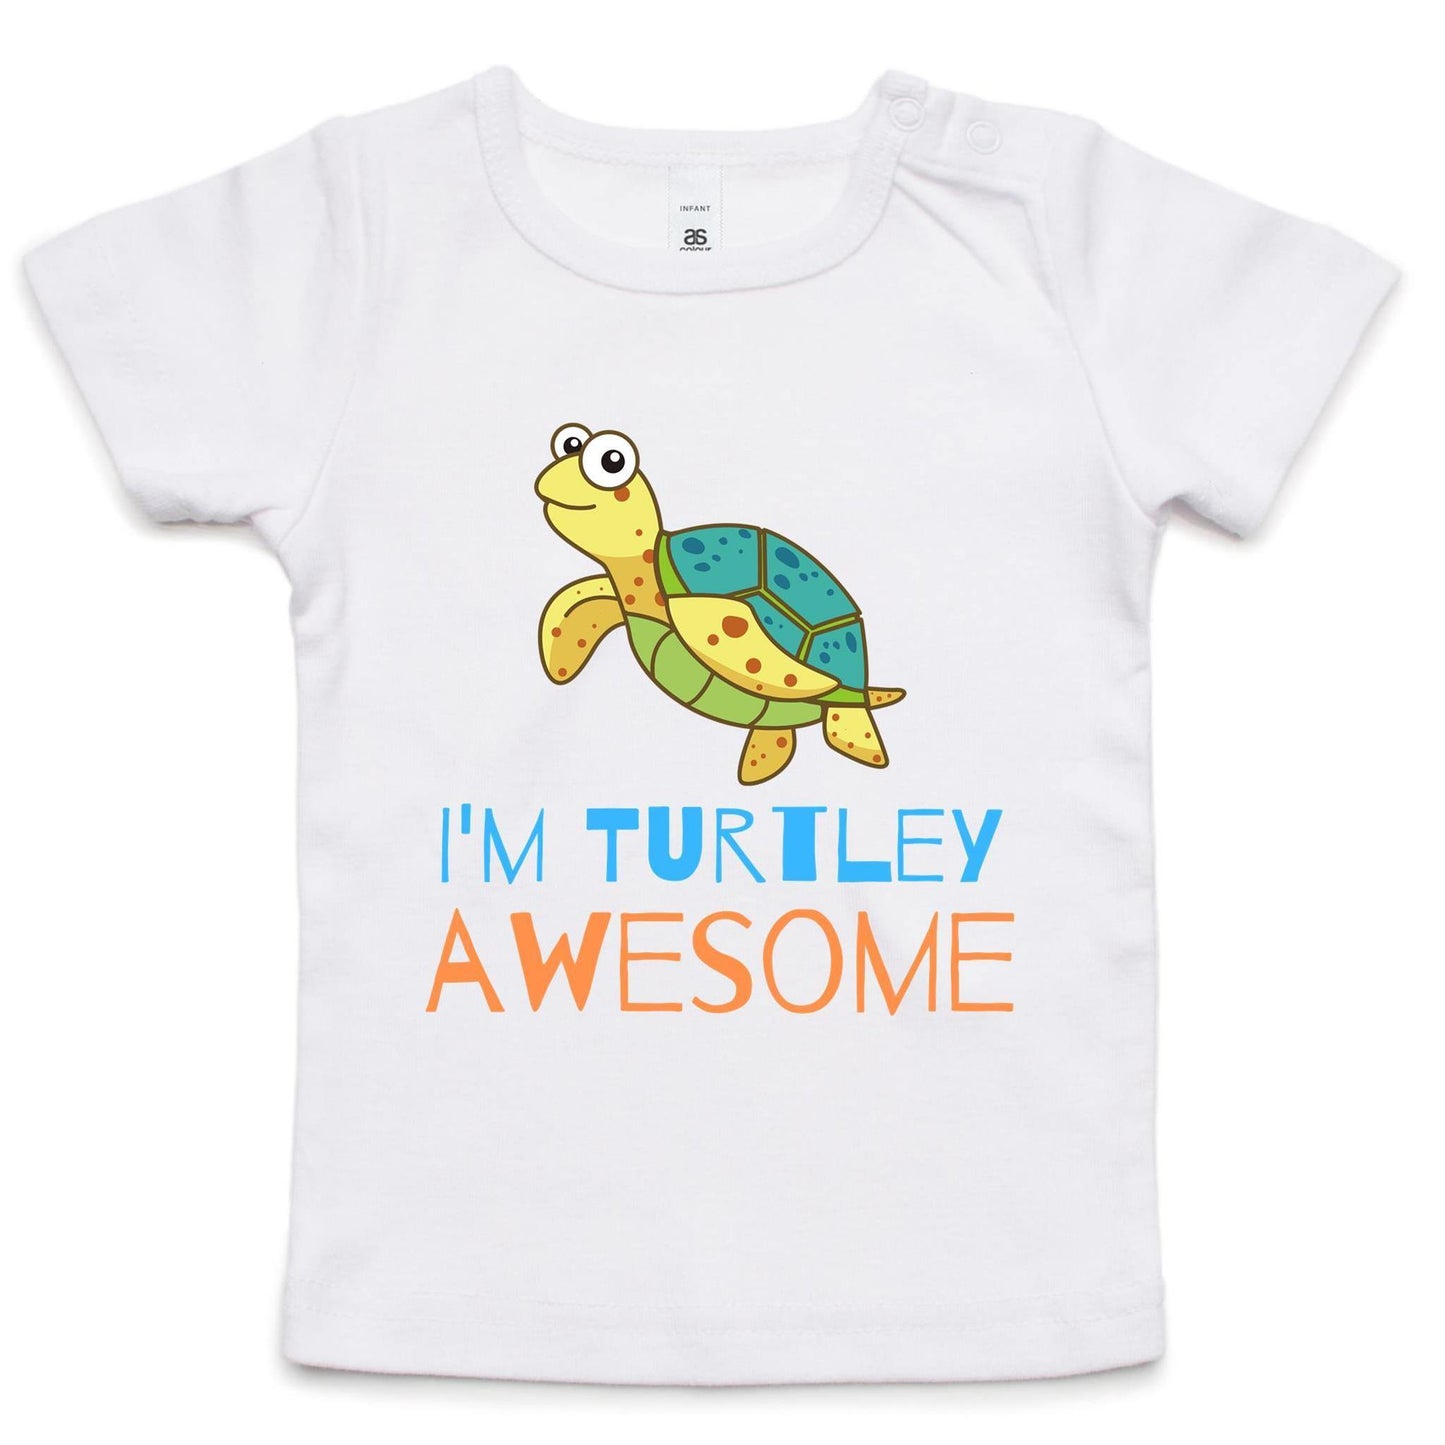 I'm Turtley Awesome - Baby T-shirt White Baby T-shirt animal kids